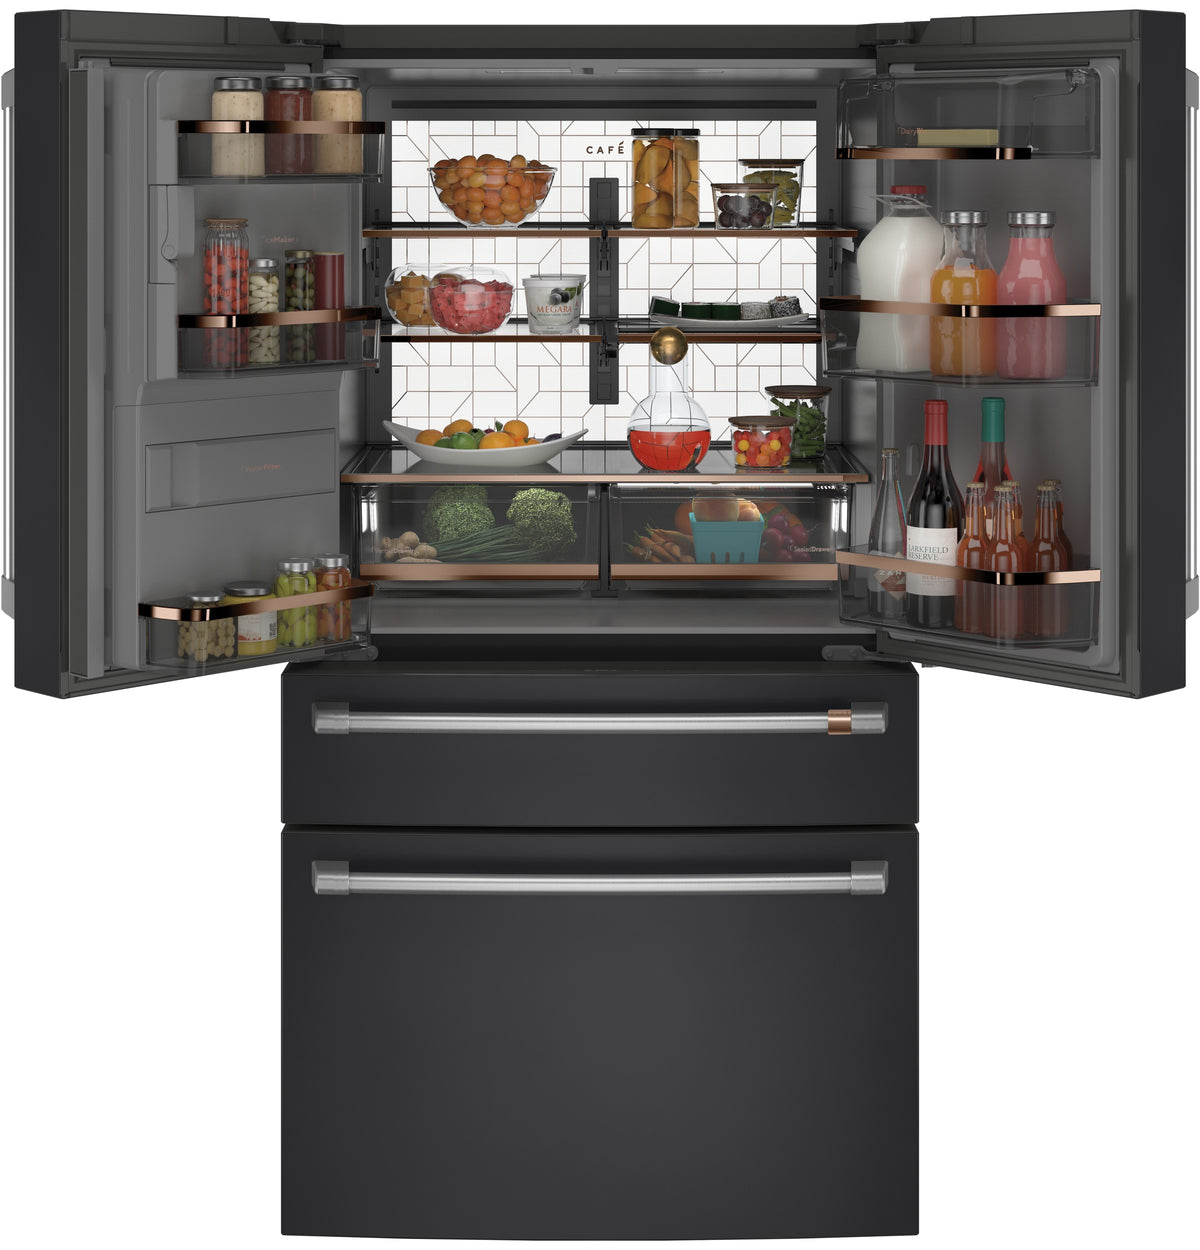 https://www.geaprstoreus.shop/wp-content/uploads/1693/72/find-the-latest-cafe-energy-star-22-3-cu-ft-smart-counter-depth-4-door-french-door-refrigerator-ge-appliances-pr-online-store-at-amazing-prices_1.jpg